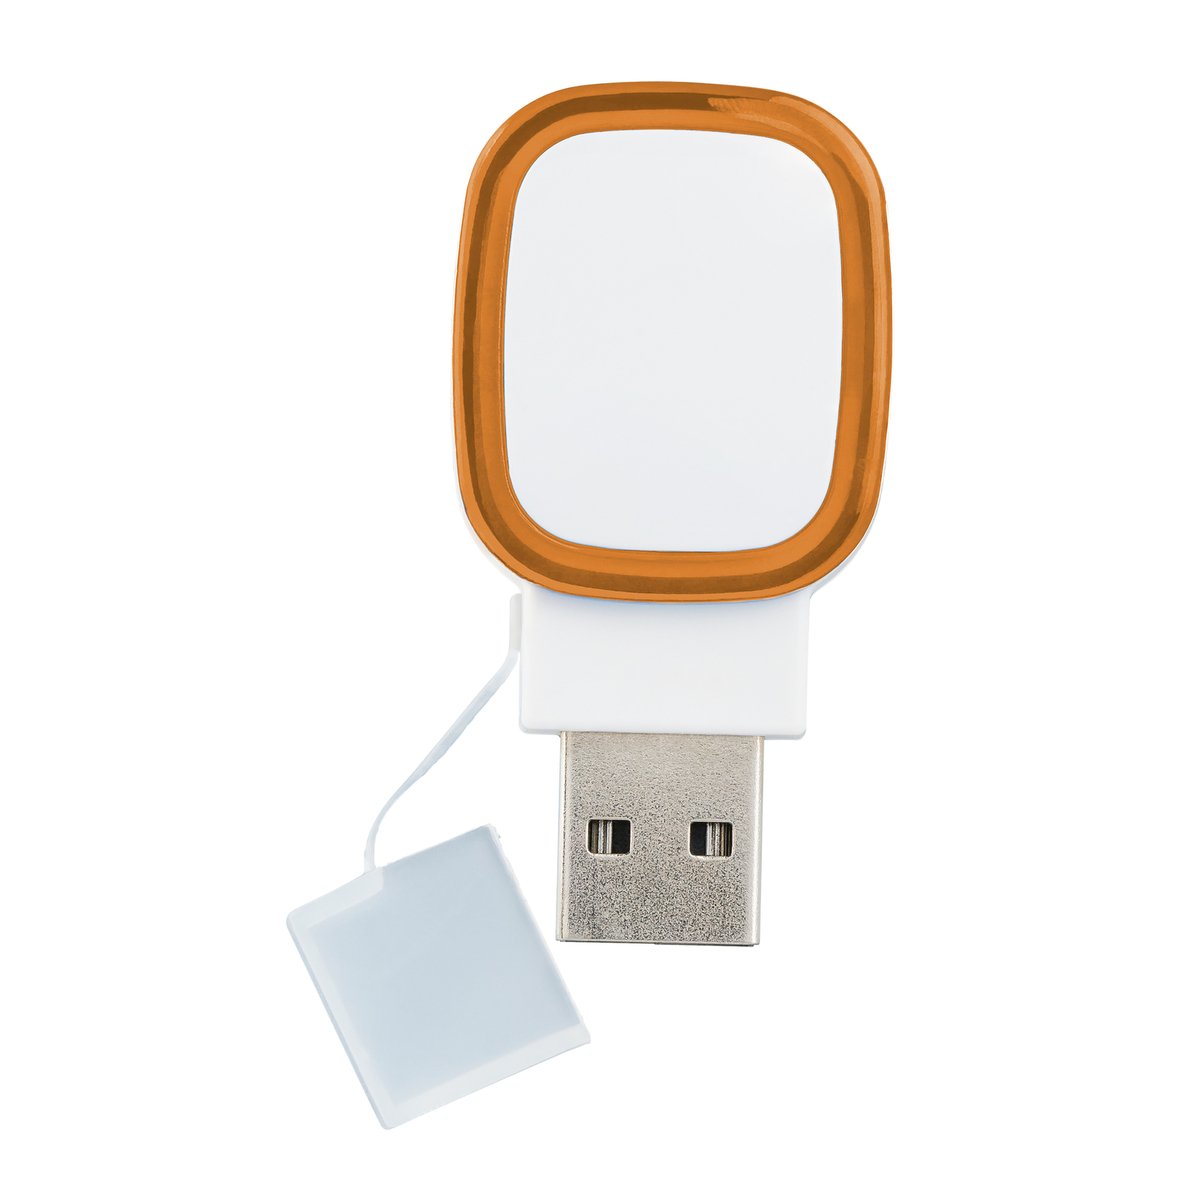 USB Flash Drive COLLECTION 500 orange 16GB